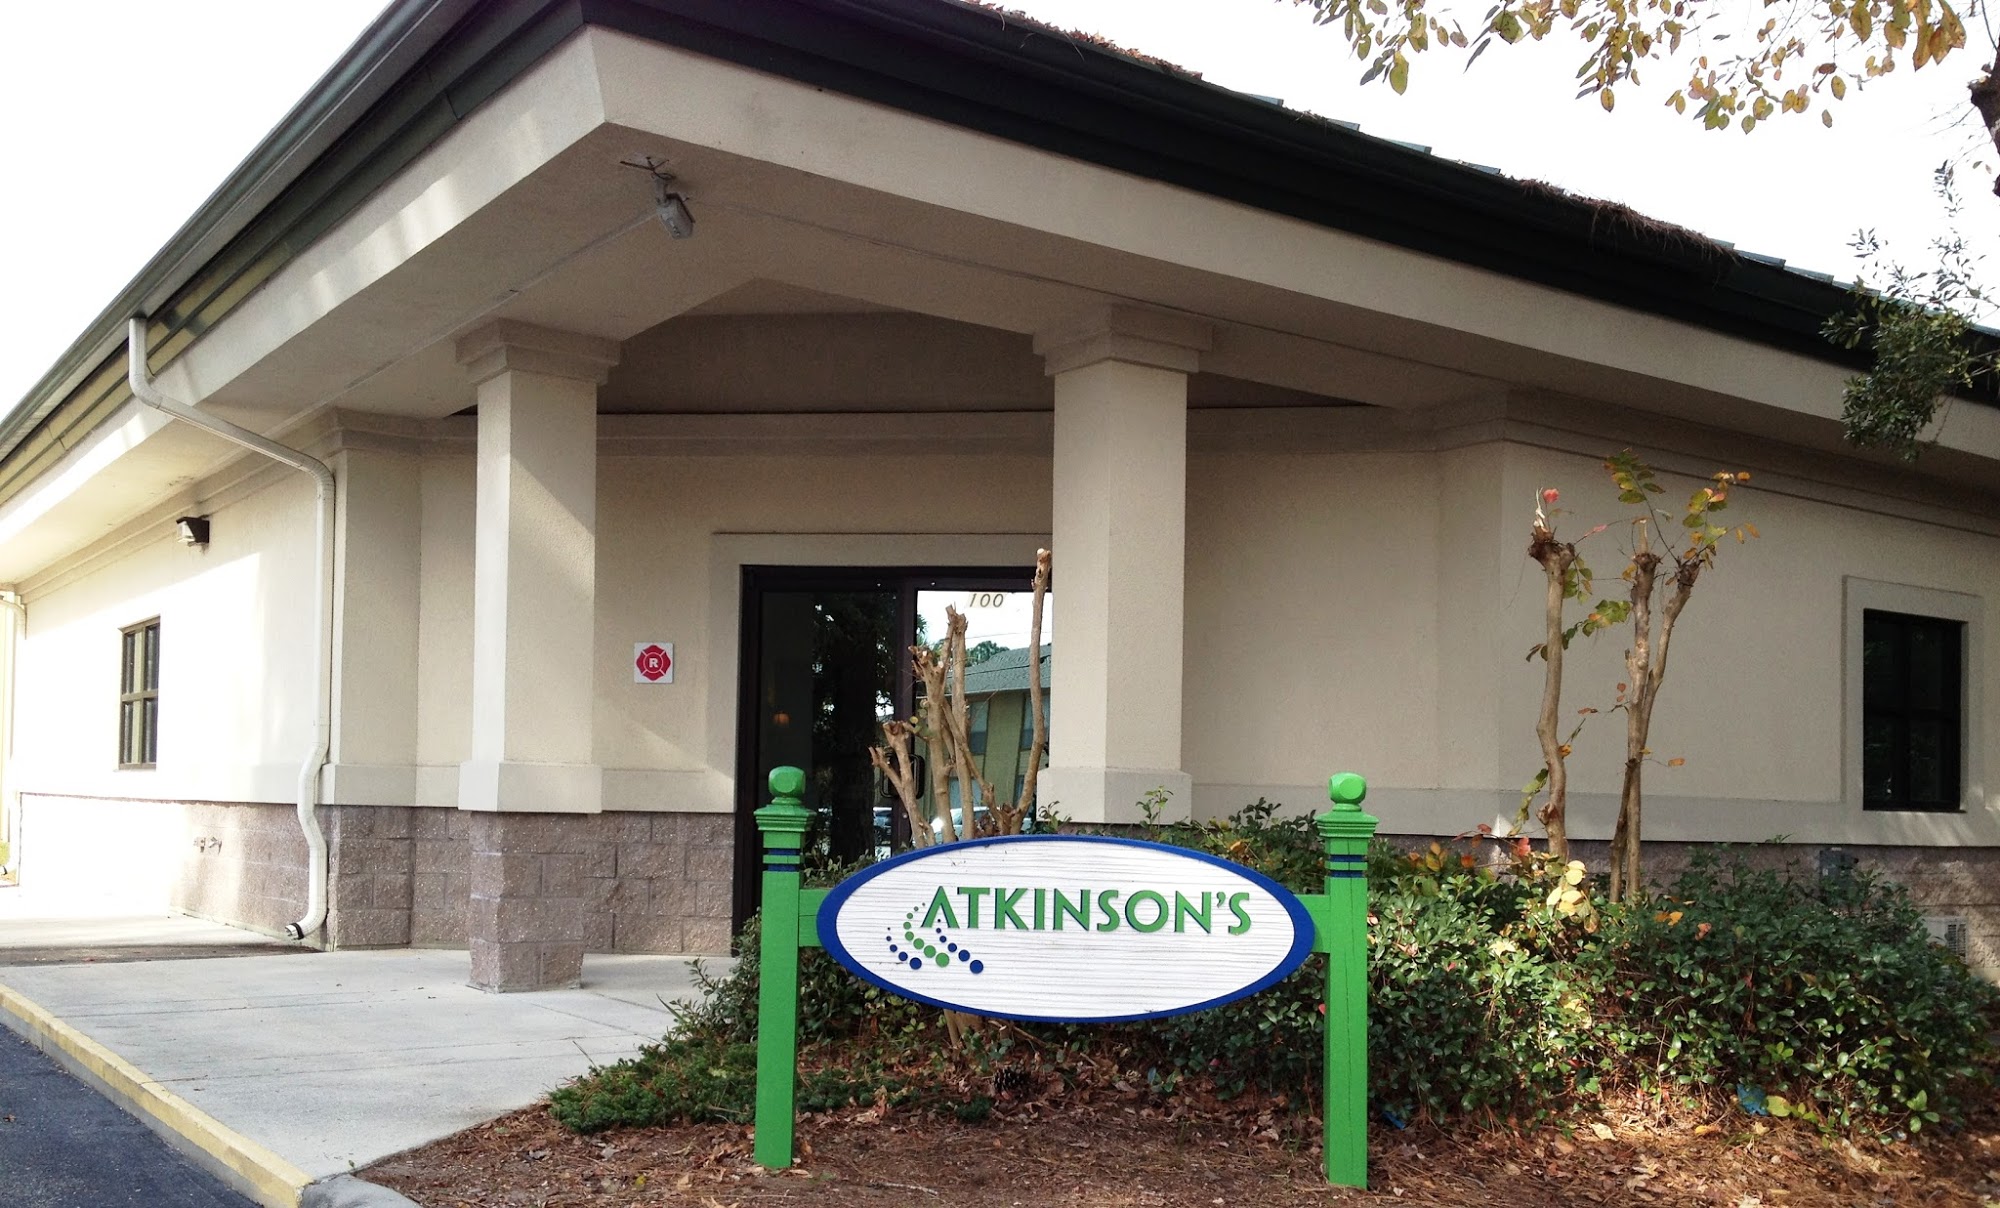 Atkinson's Pharmacy Group